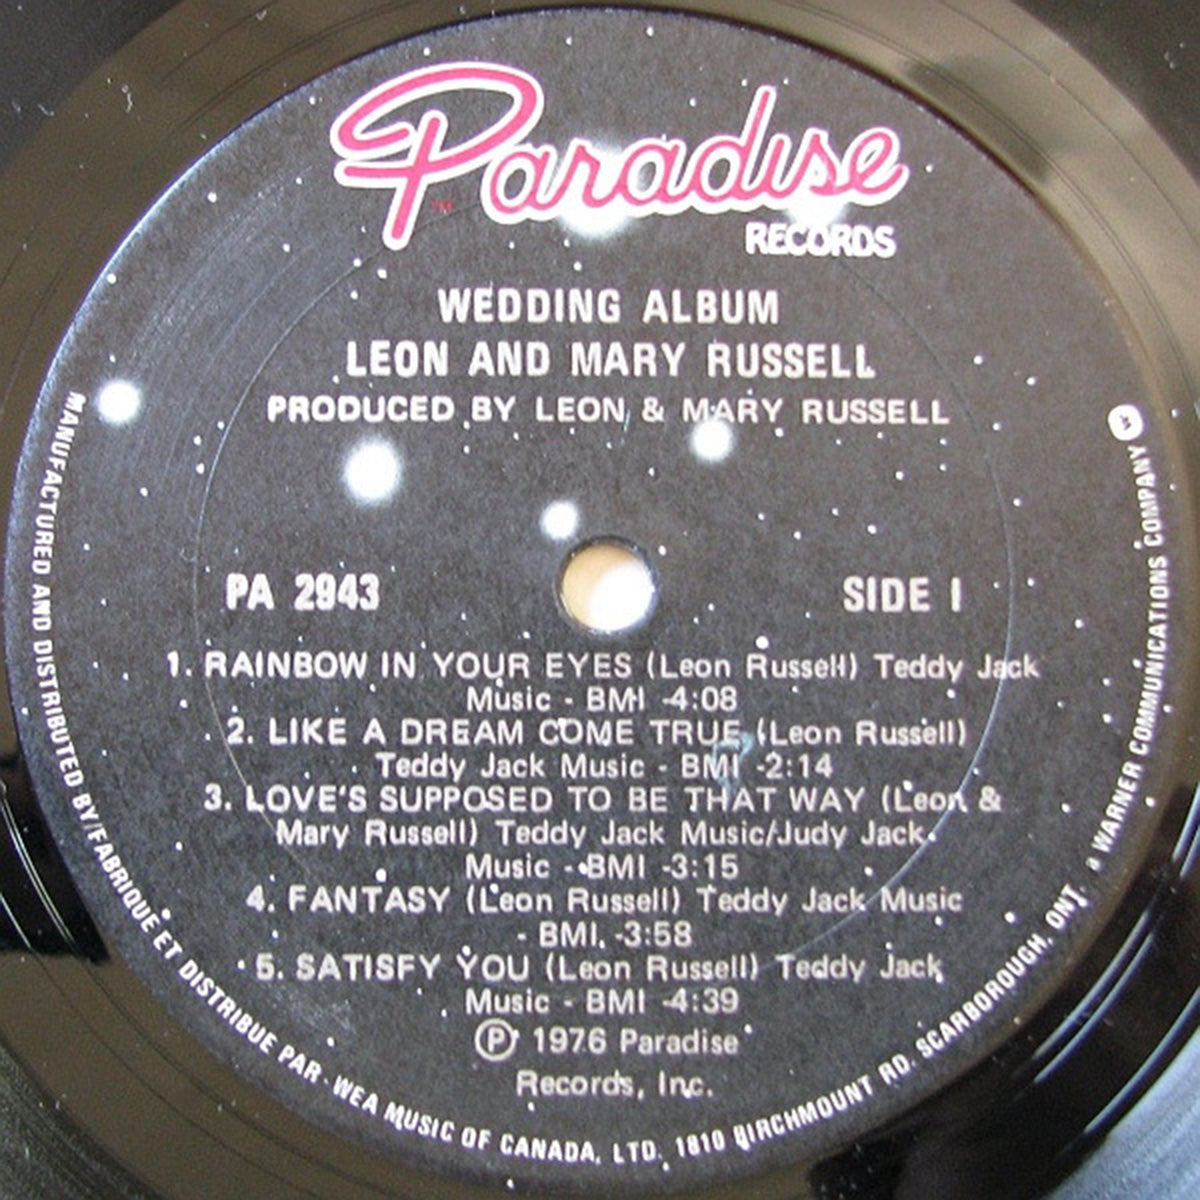 Leon & Mary Russell – Wedding Album - 1976